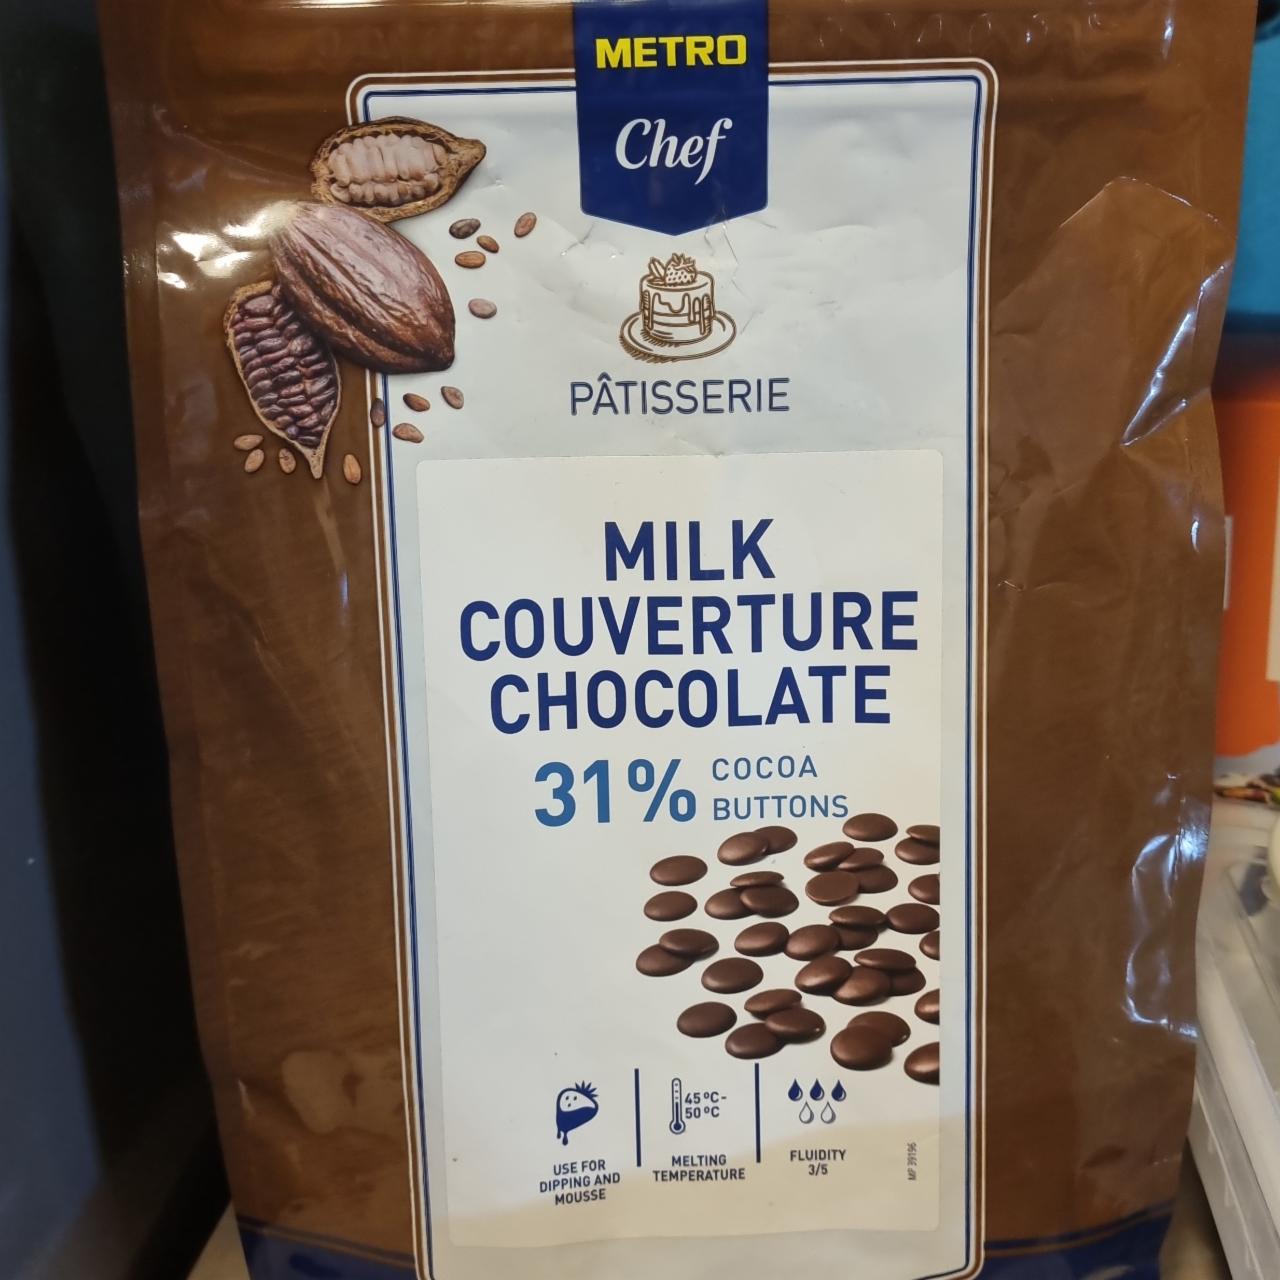 Fotografie - Milk Couverture Chocolate 31% cocoa buttons Metro Chef